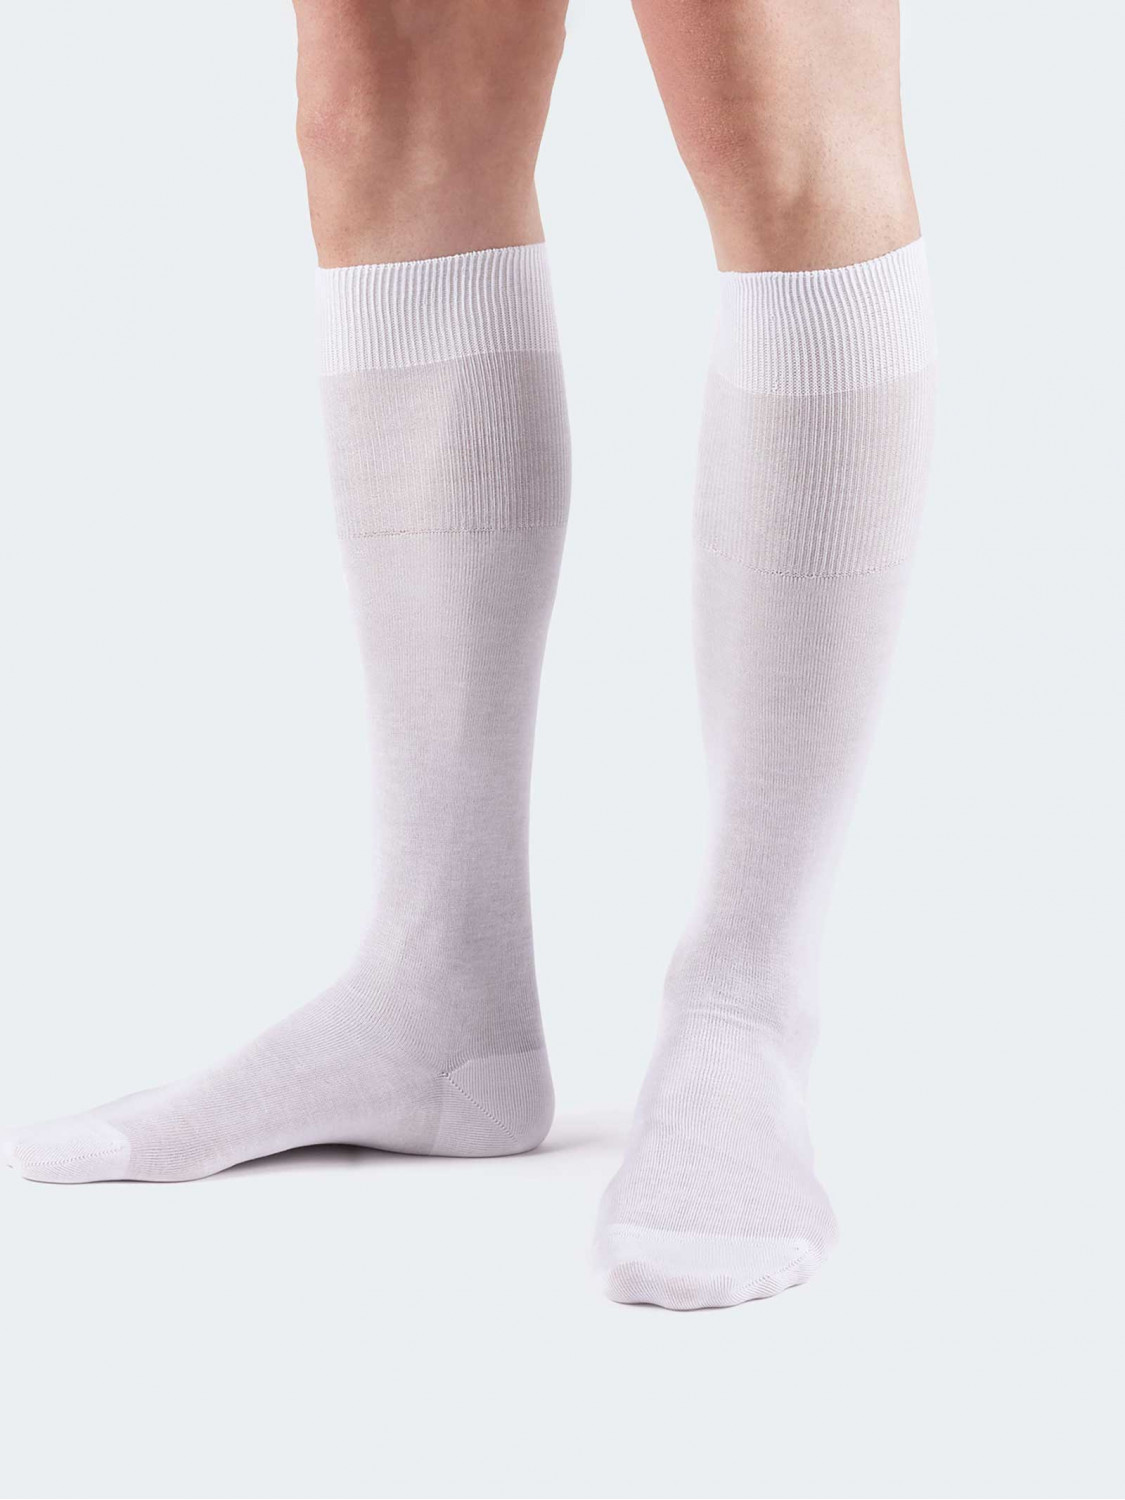 Plain 100% cotton lisle socks - Made in Italy